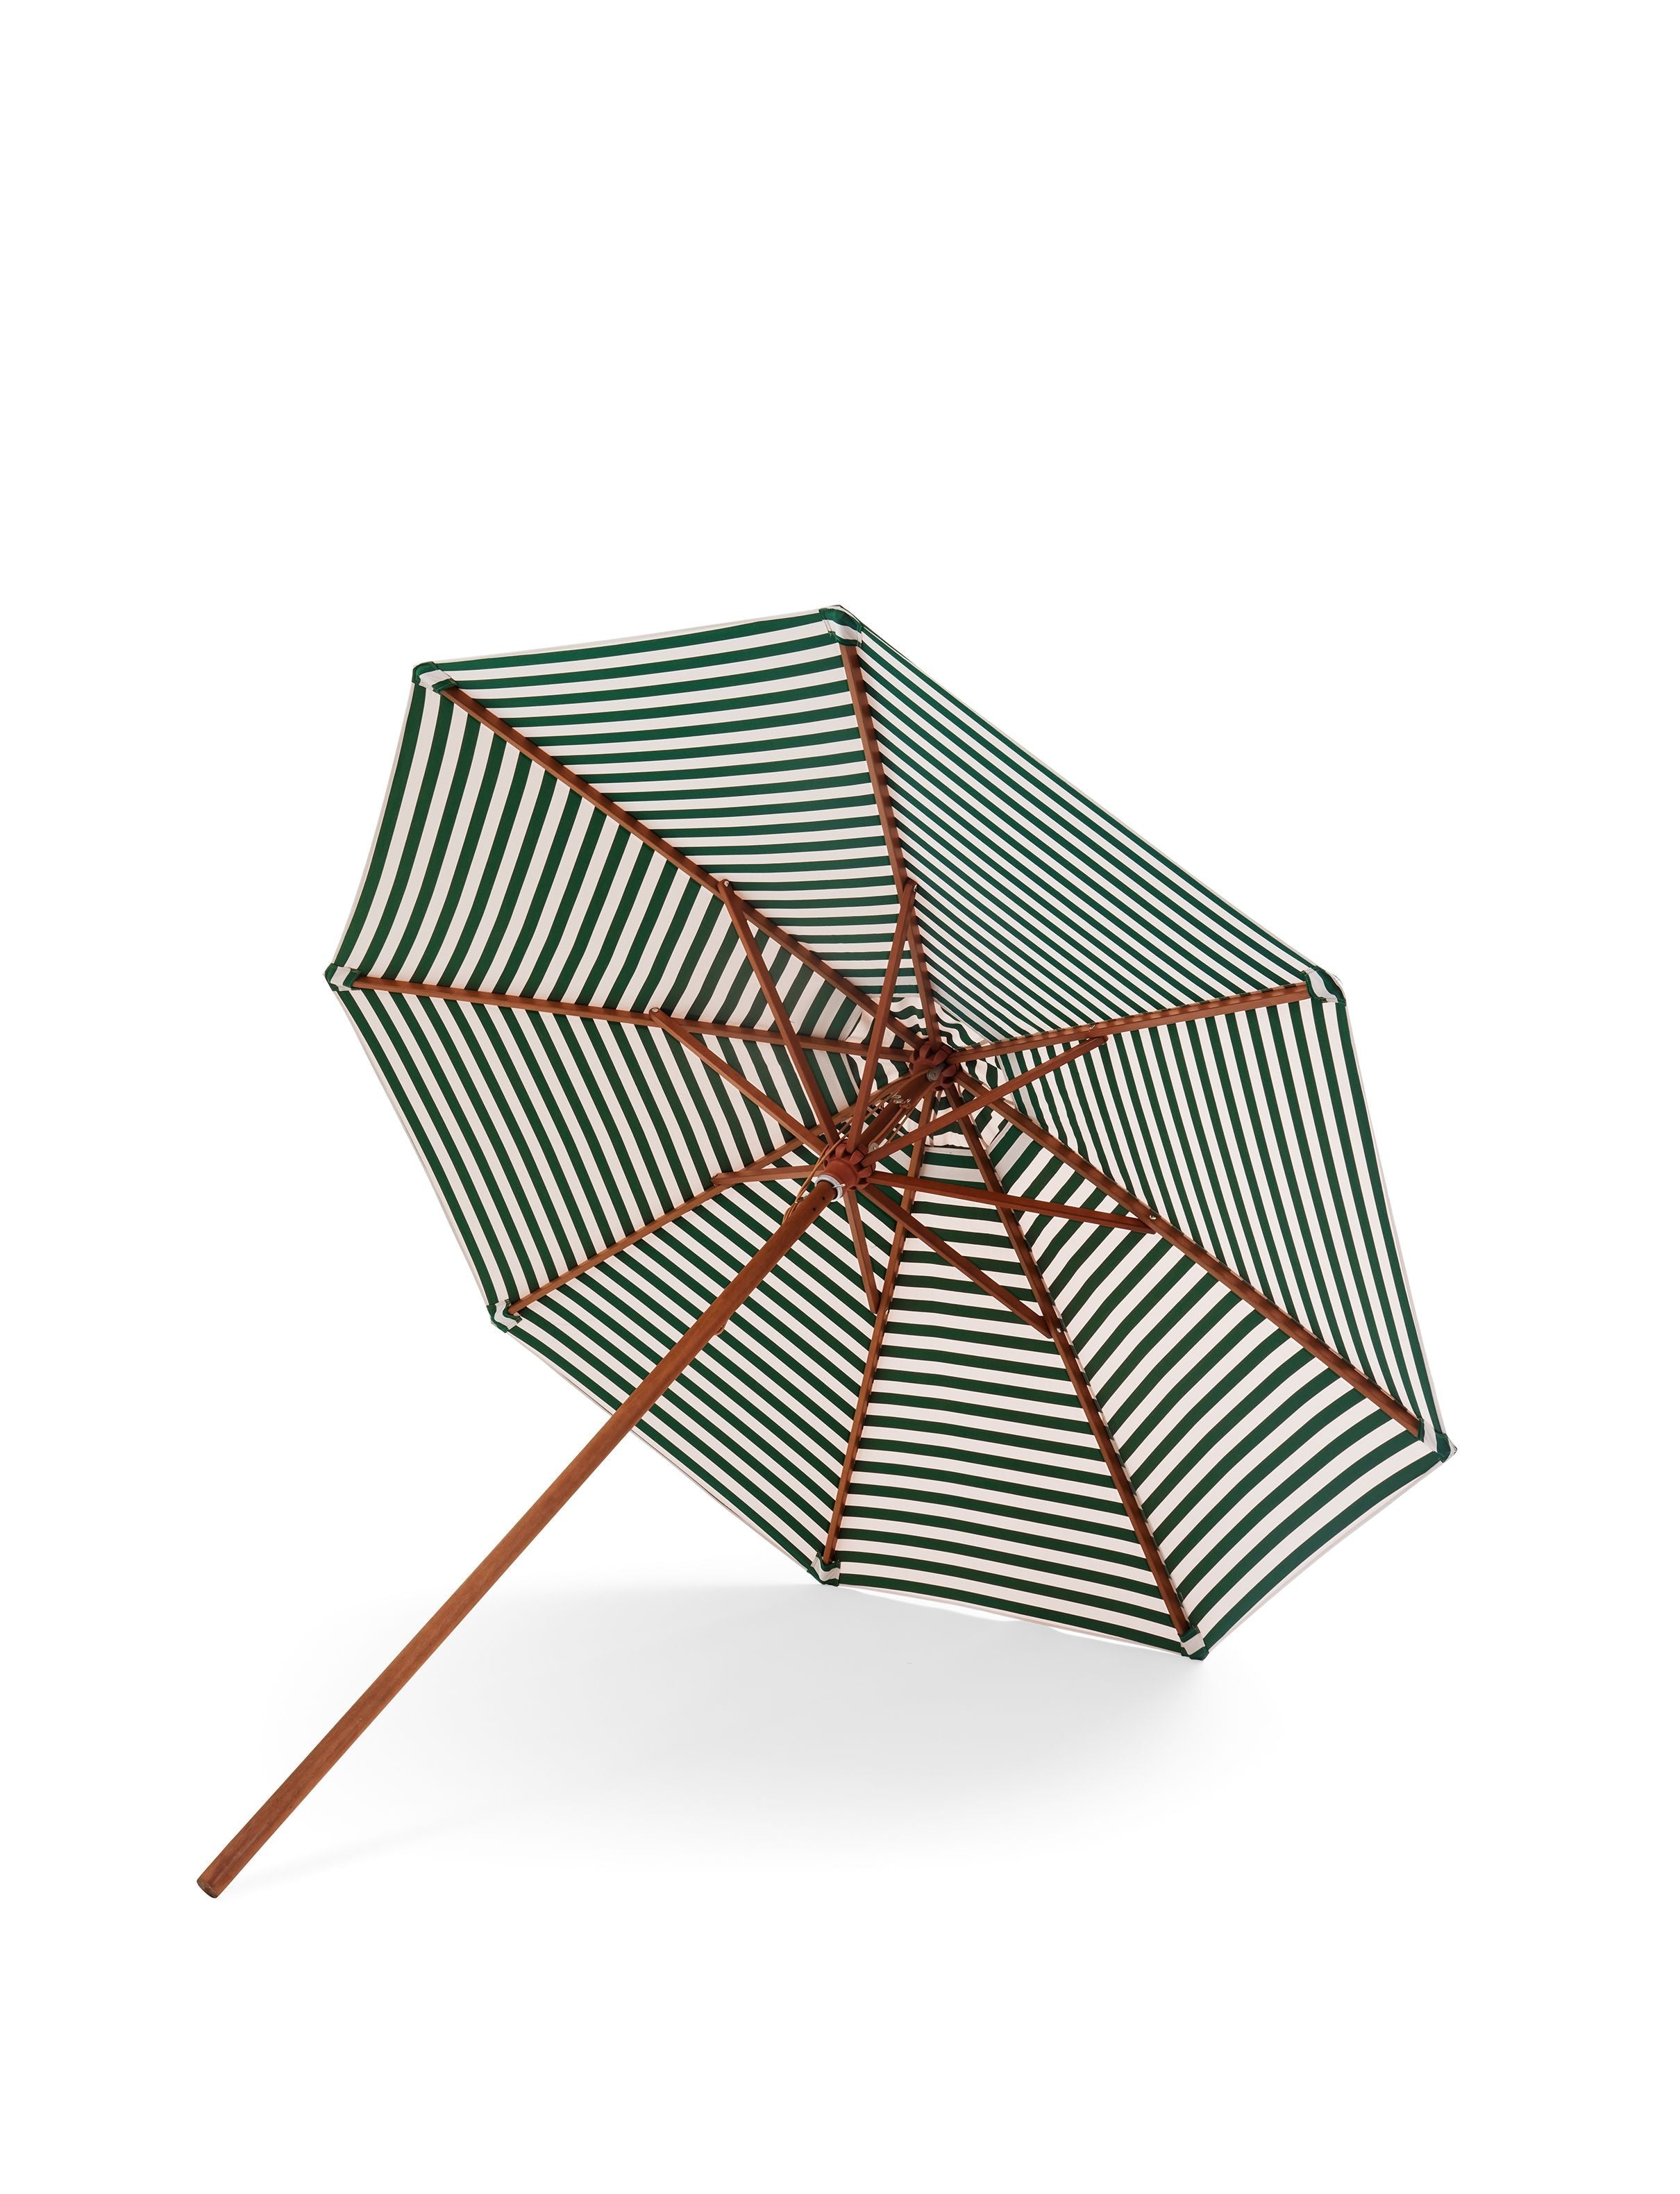 Skagerak Messina paraply Ø300 cm, lys abrikos/mørkegrøn stribe